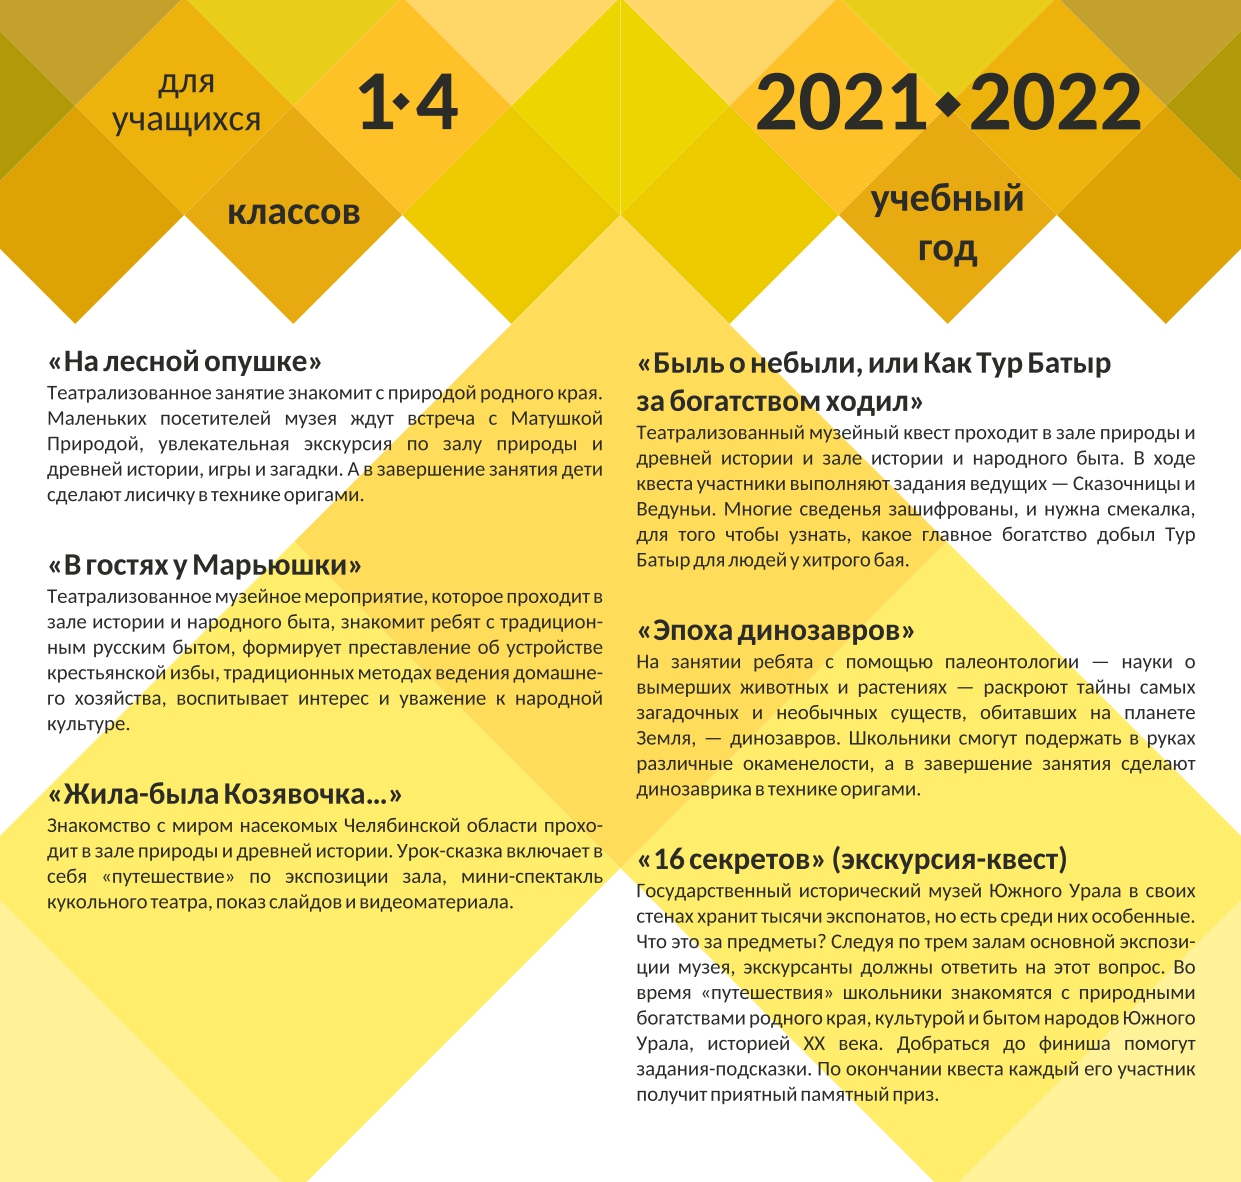 Buklet_tematicheskie_zanyatia_2021-2022_page-0002.jpg